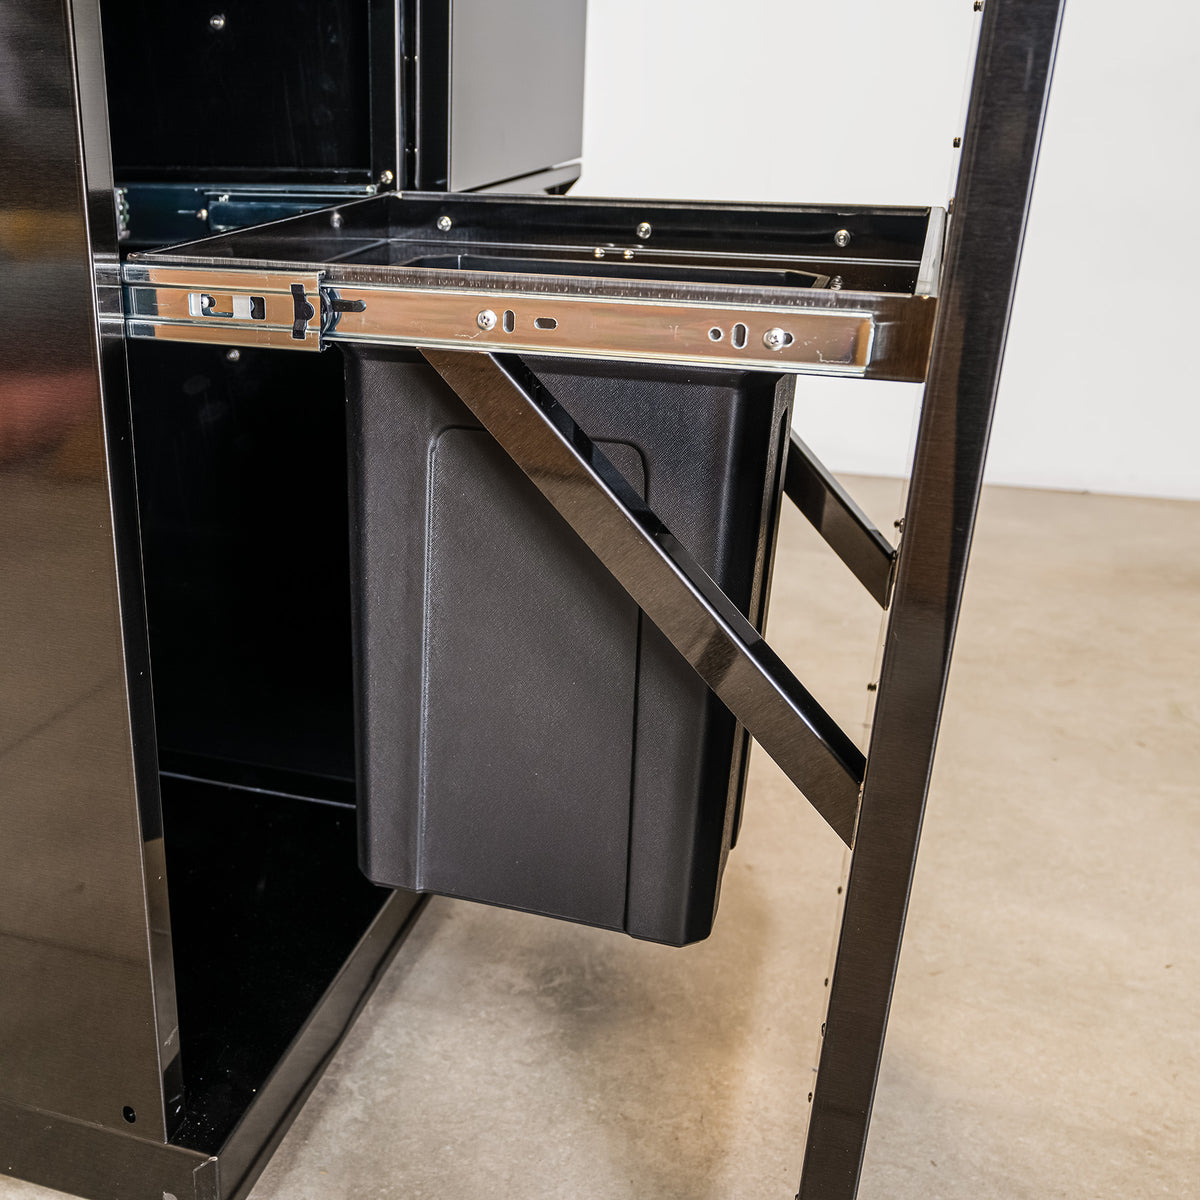 Draco Grills Outdoor Kitchen Black Stainless Steel Waste Bin Cabinet